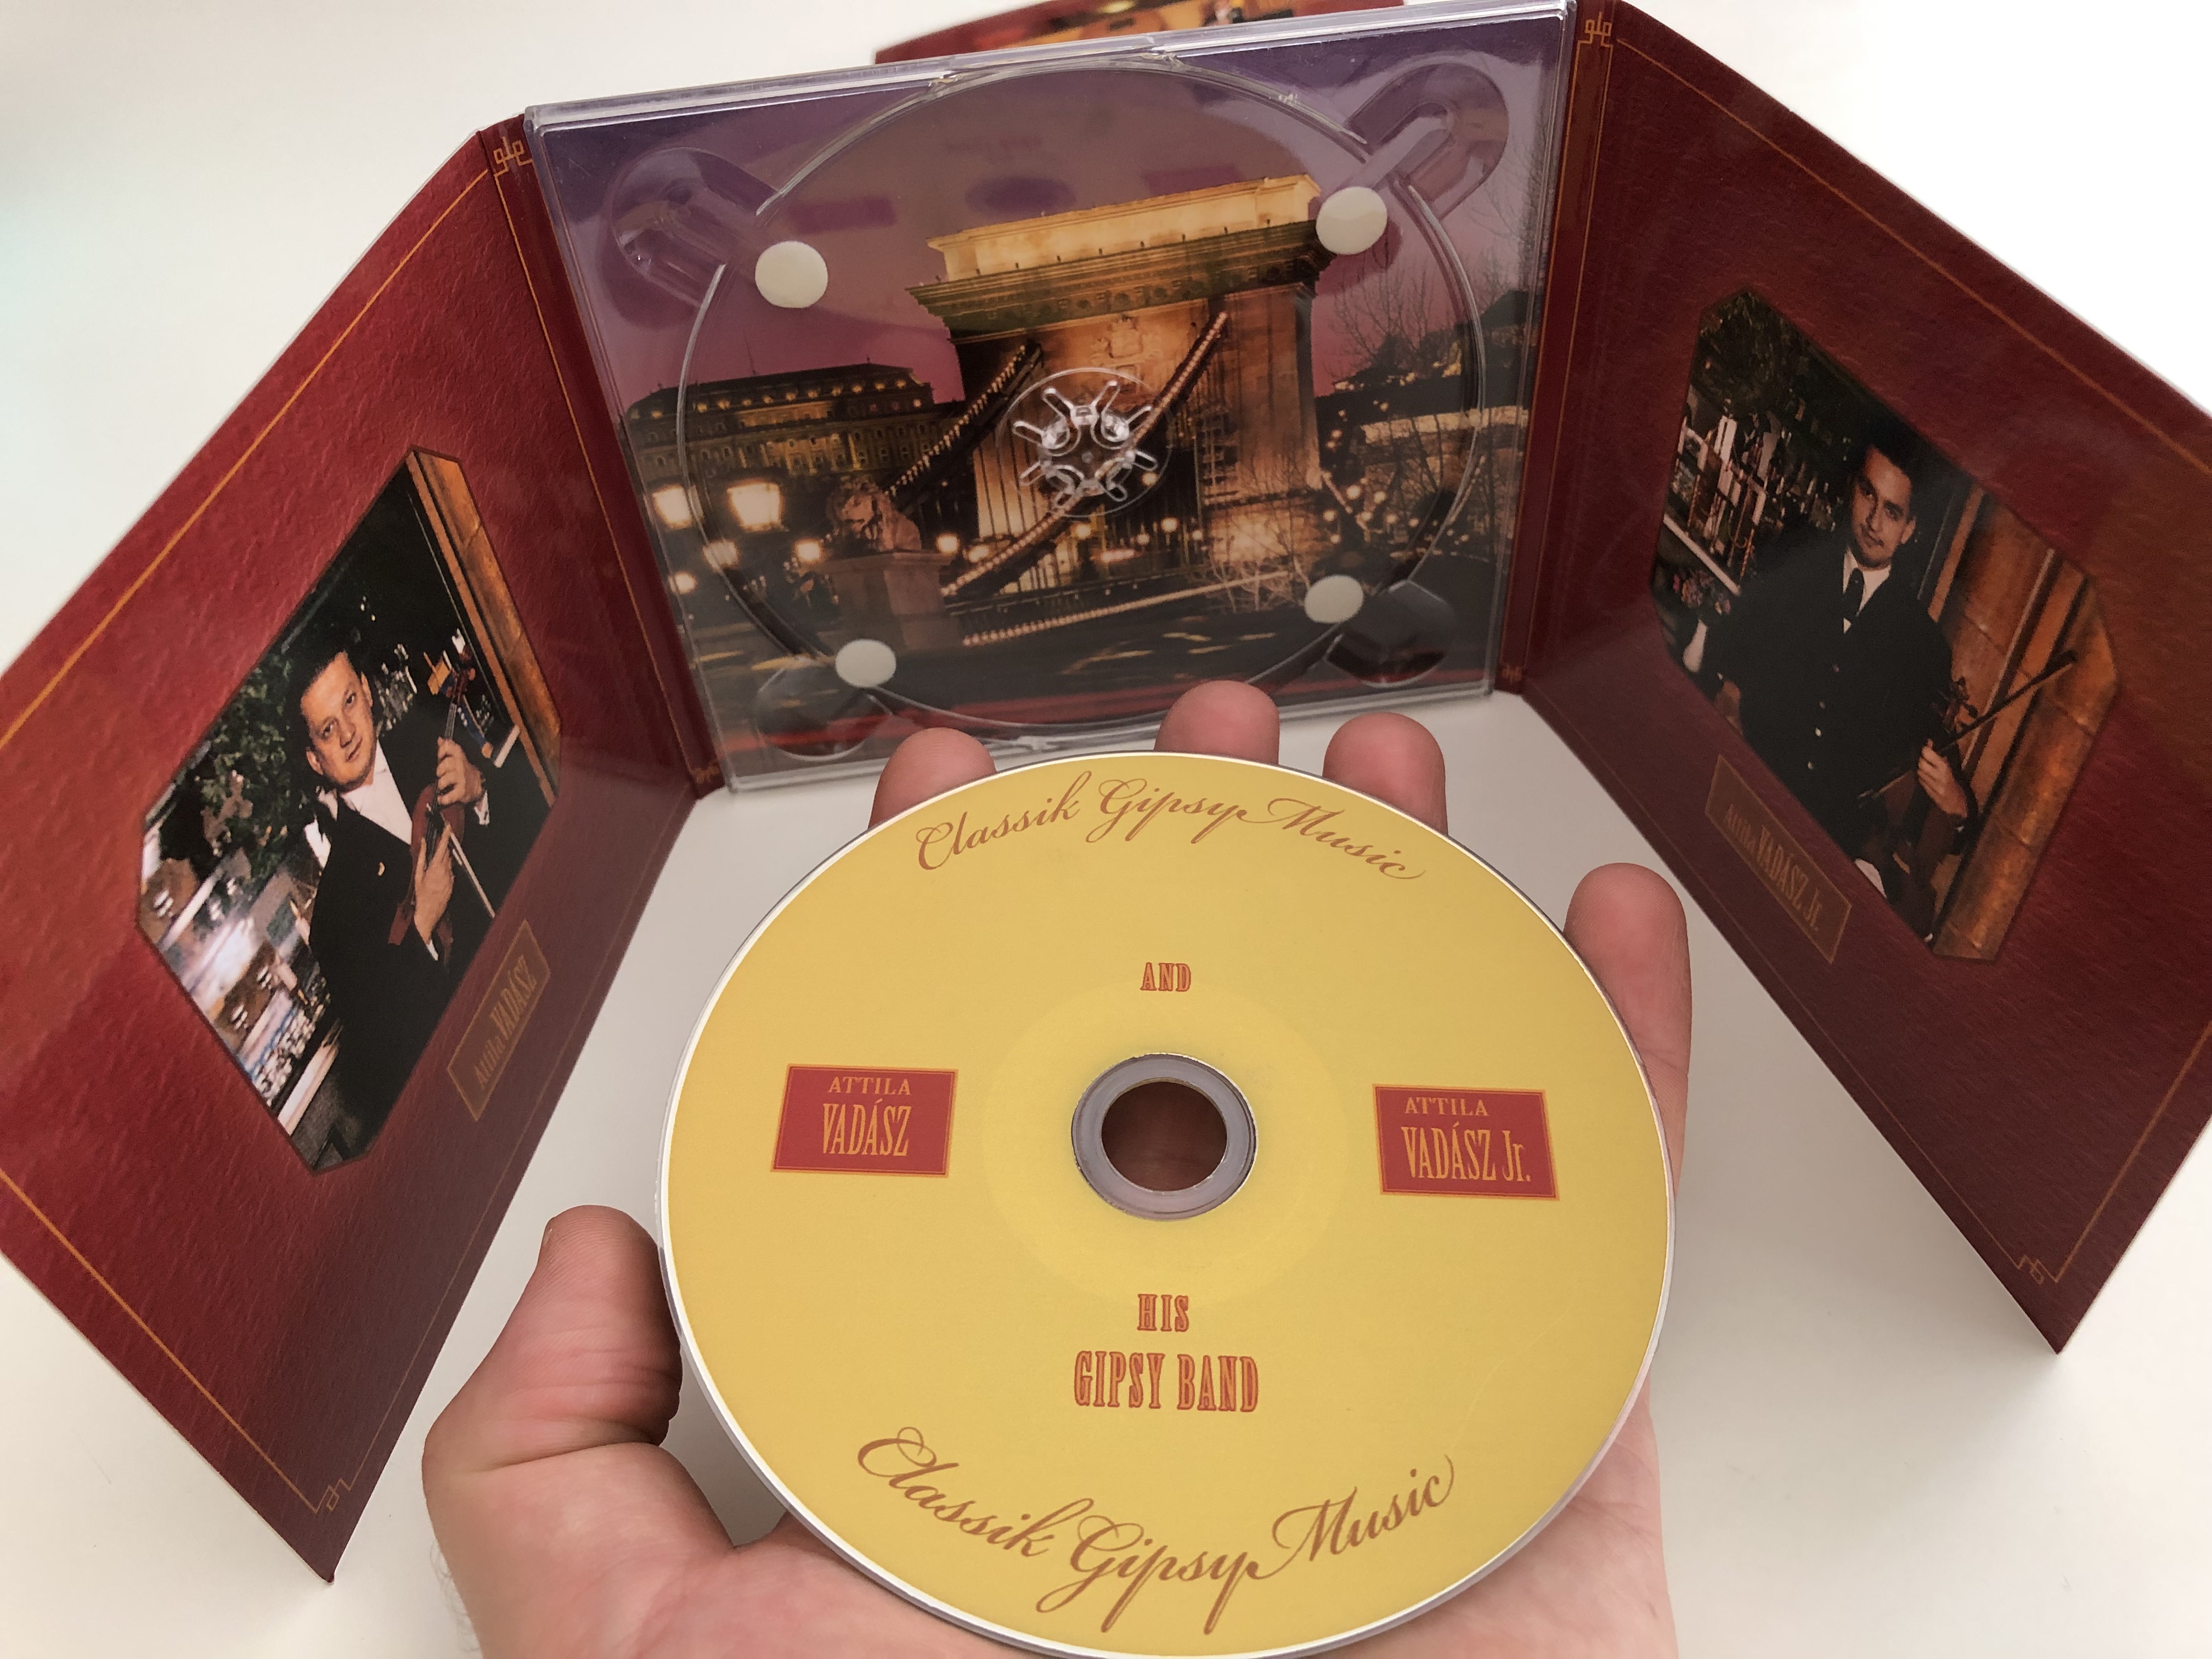 classic-gipsy-music-attila-vad-sz-and-his-gipsy-band-attila-vad-sz-jr.-audio-cd-7-.jpg